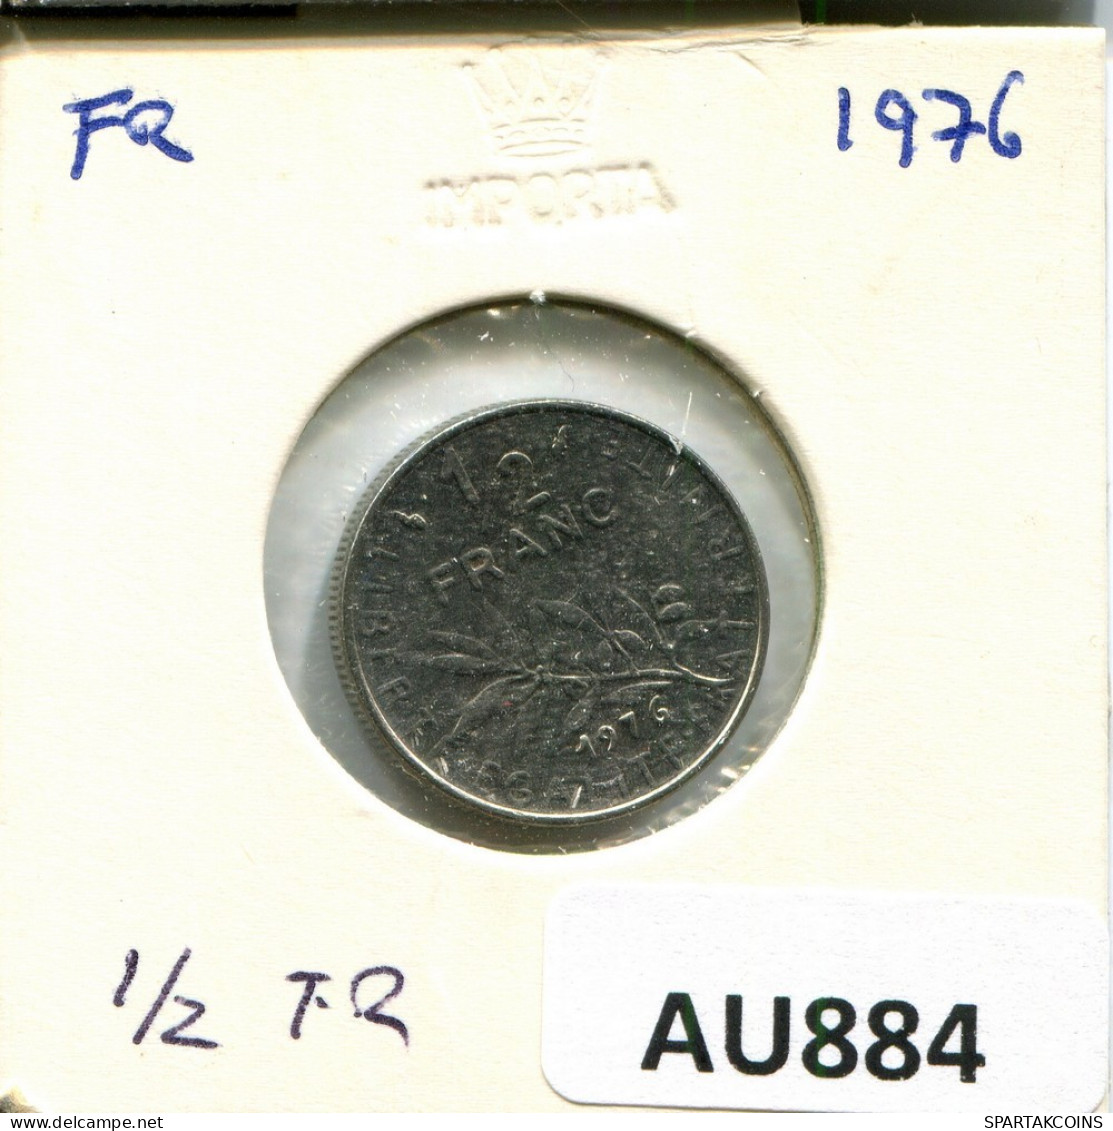 1/2 FRANC 1976 FRANCE Coin #AU884.U.A - 1/2 Franc